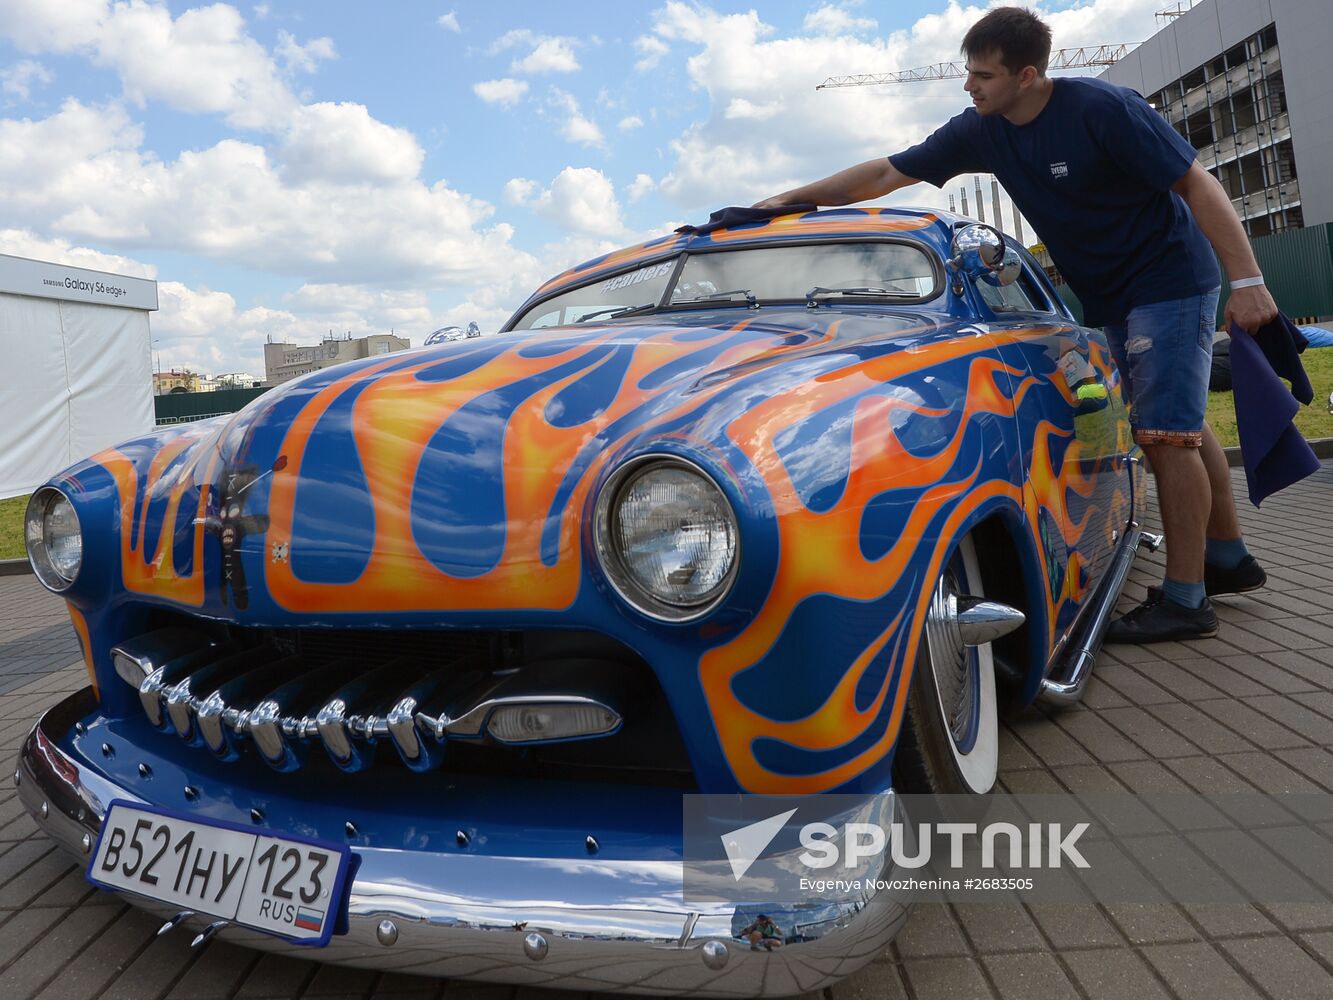 Moscow's Legends Park hosts Super Car Show 2015